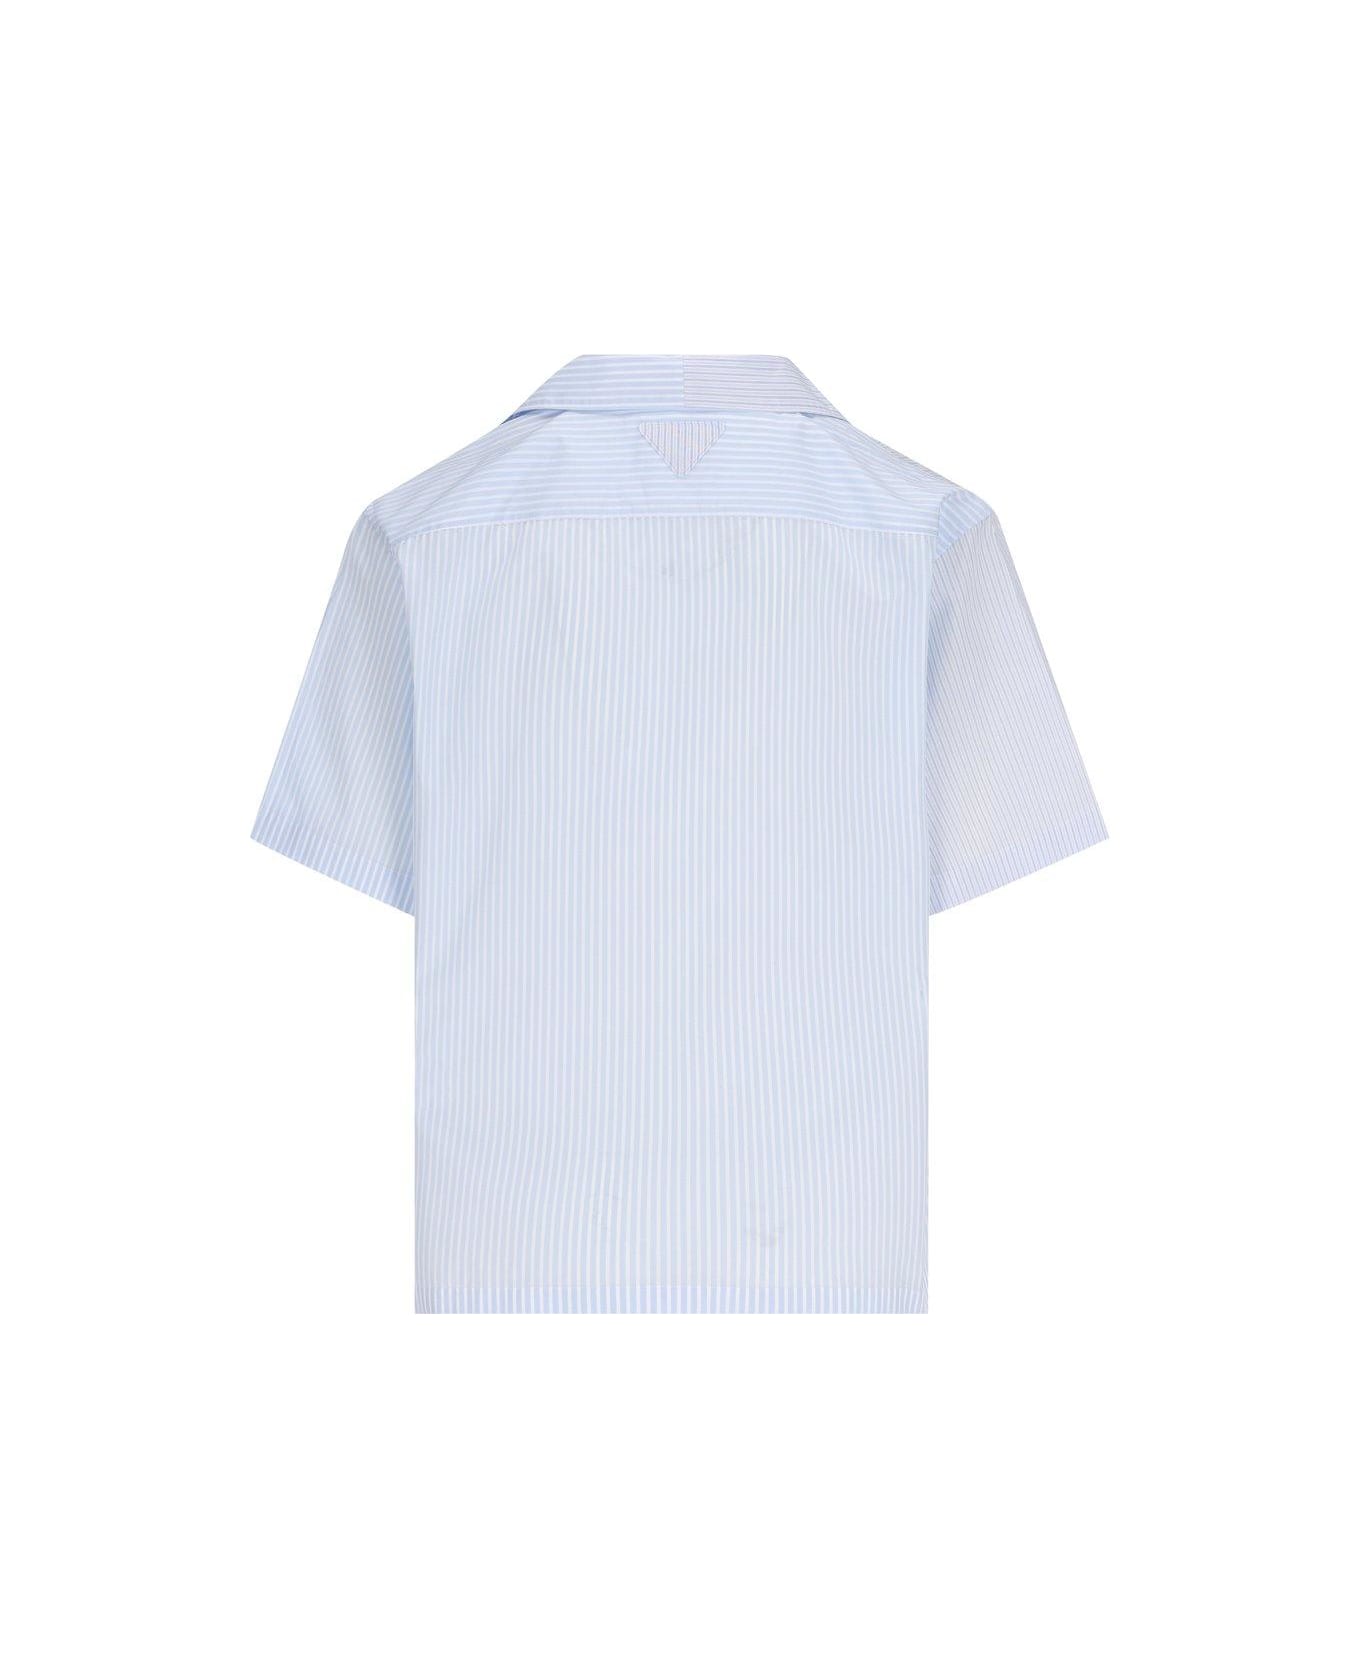 Prada Striped Short-sleeved Button-up Shirt - Bianco+cielo